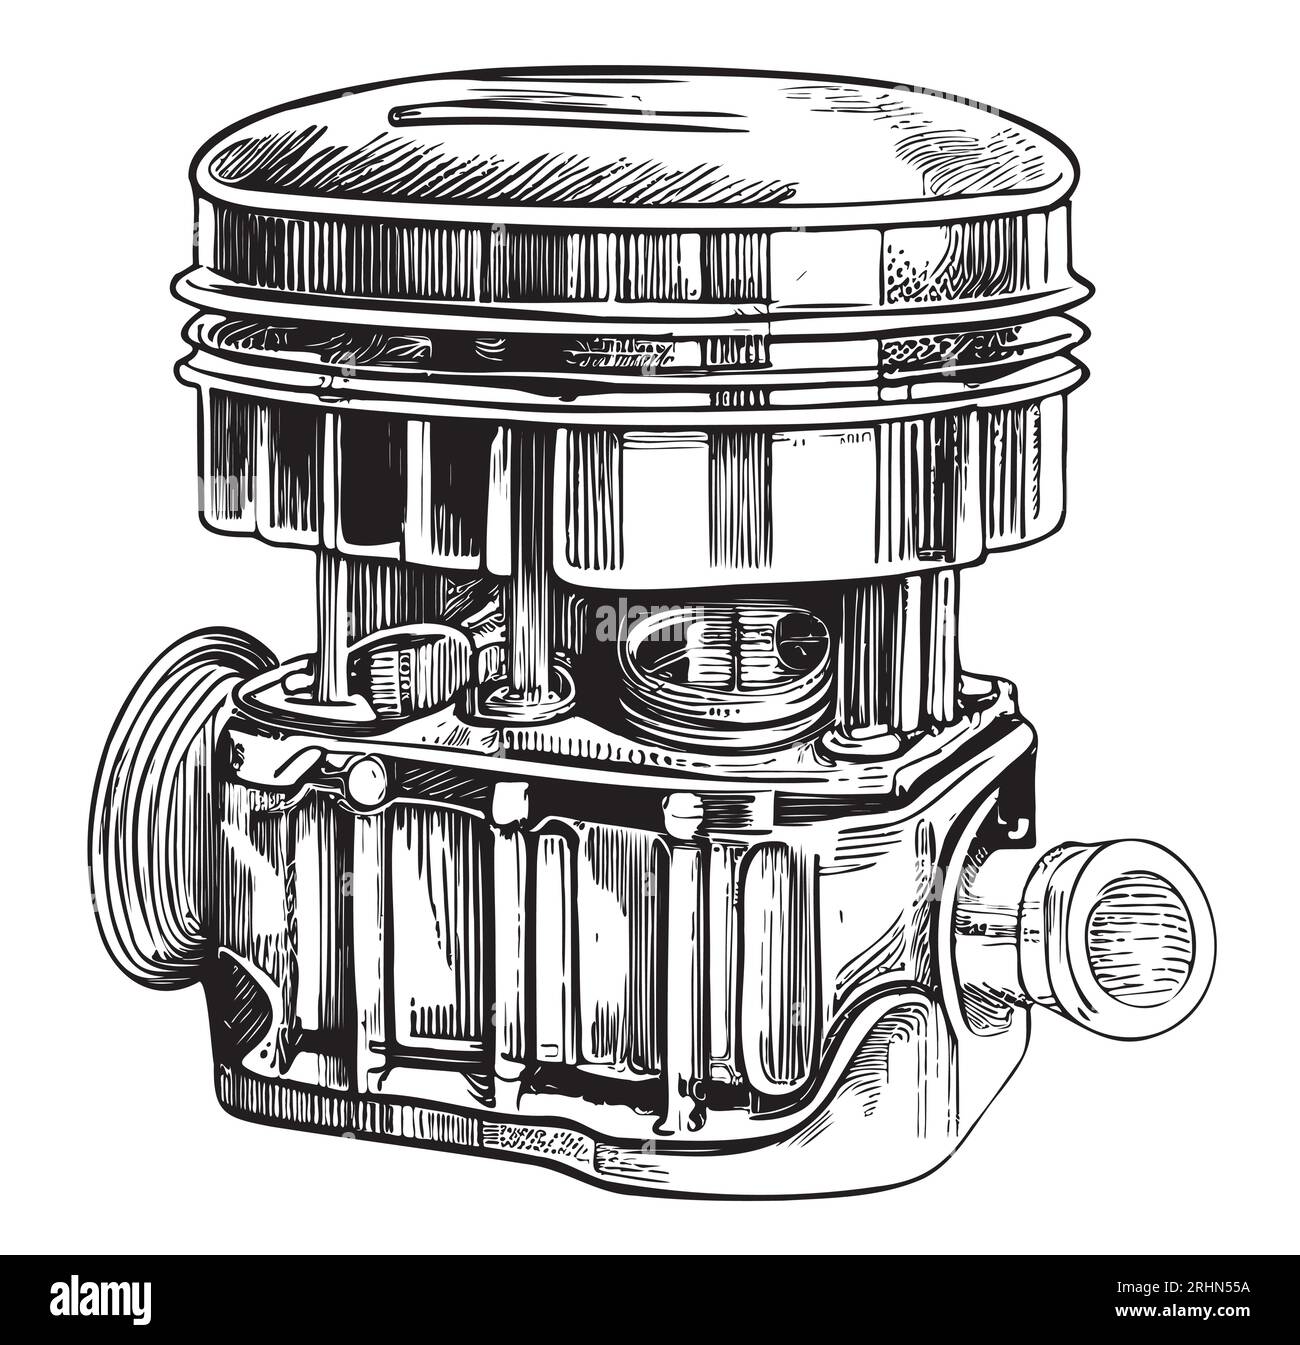 Auto Kolben Hand gezeichnete Skizze Transport Detail Illustration Stock-Vektorgrafik  - Alamy